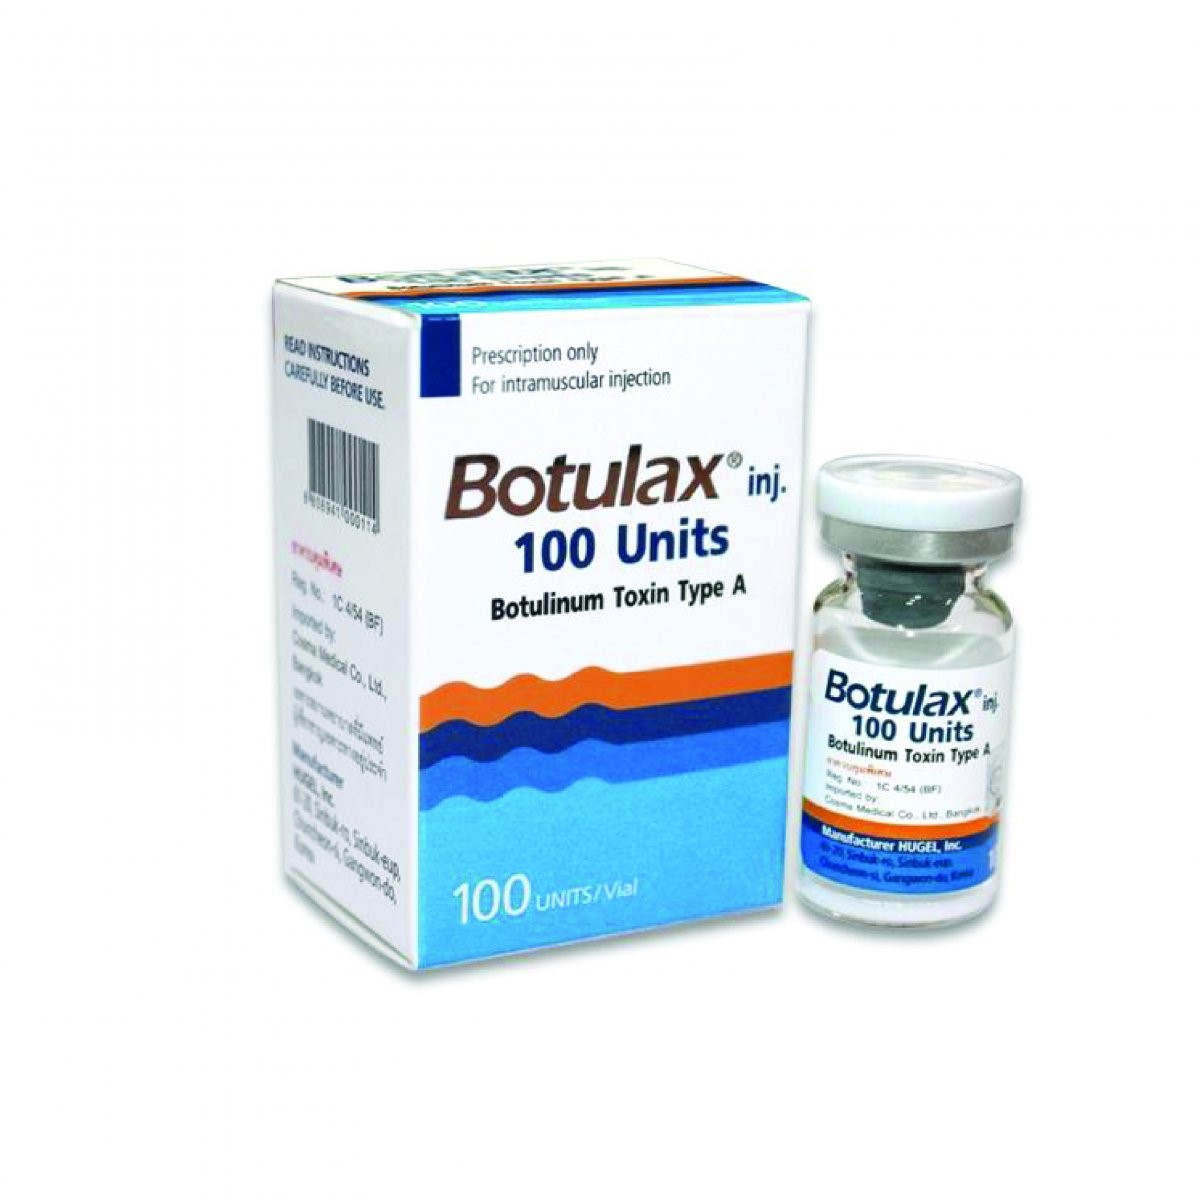 Korea Botox botulax